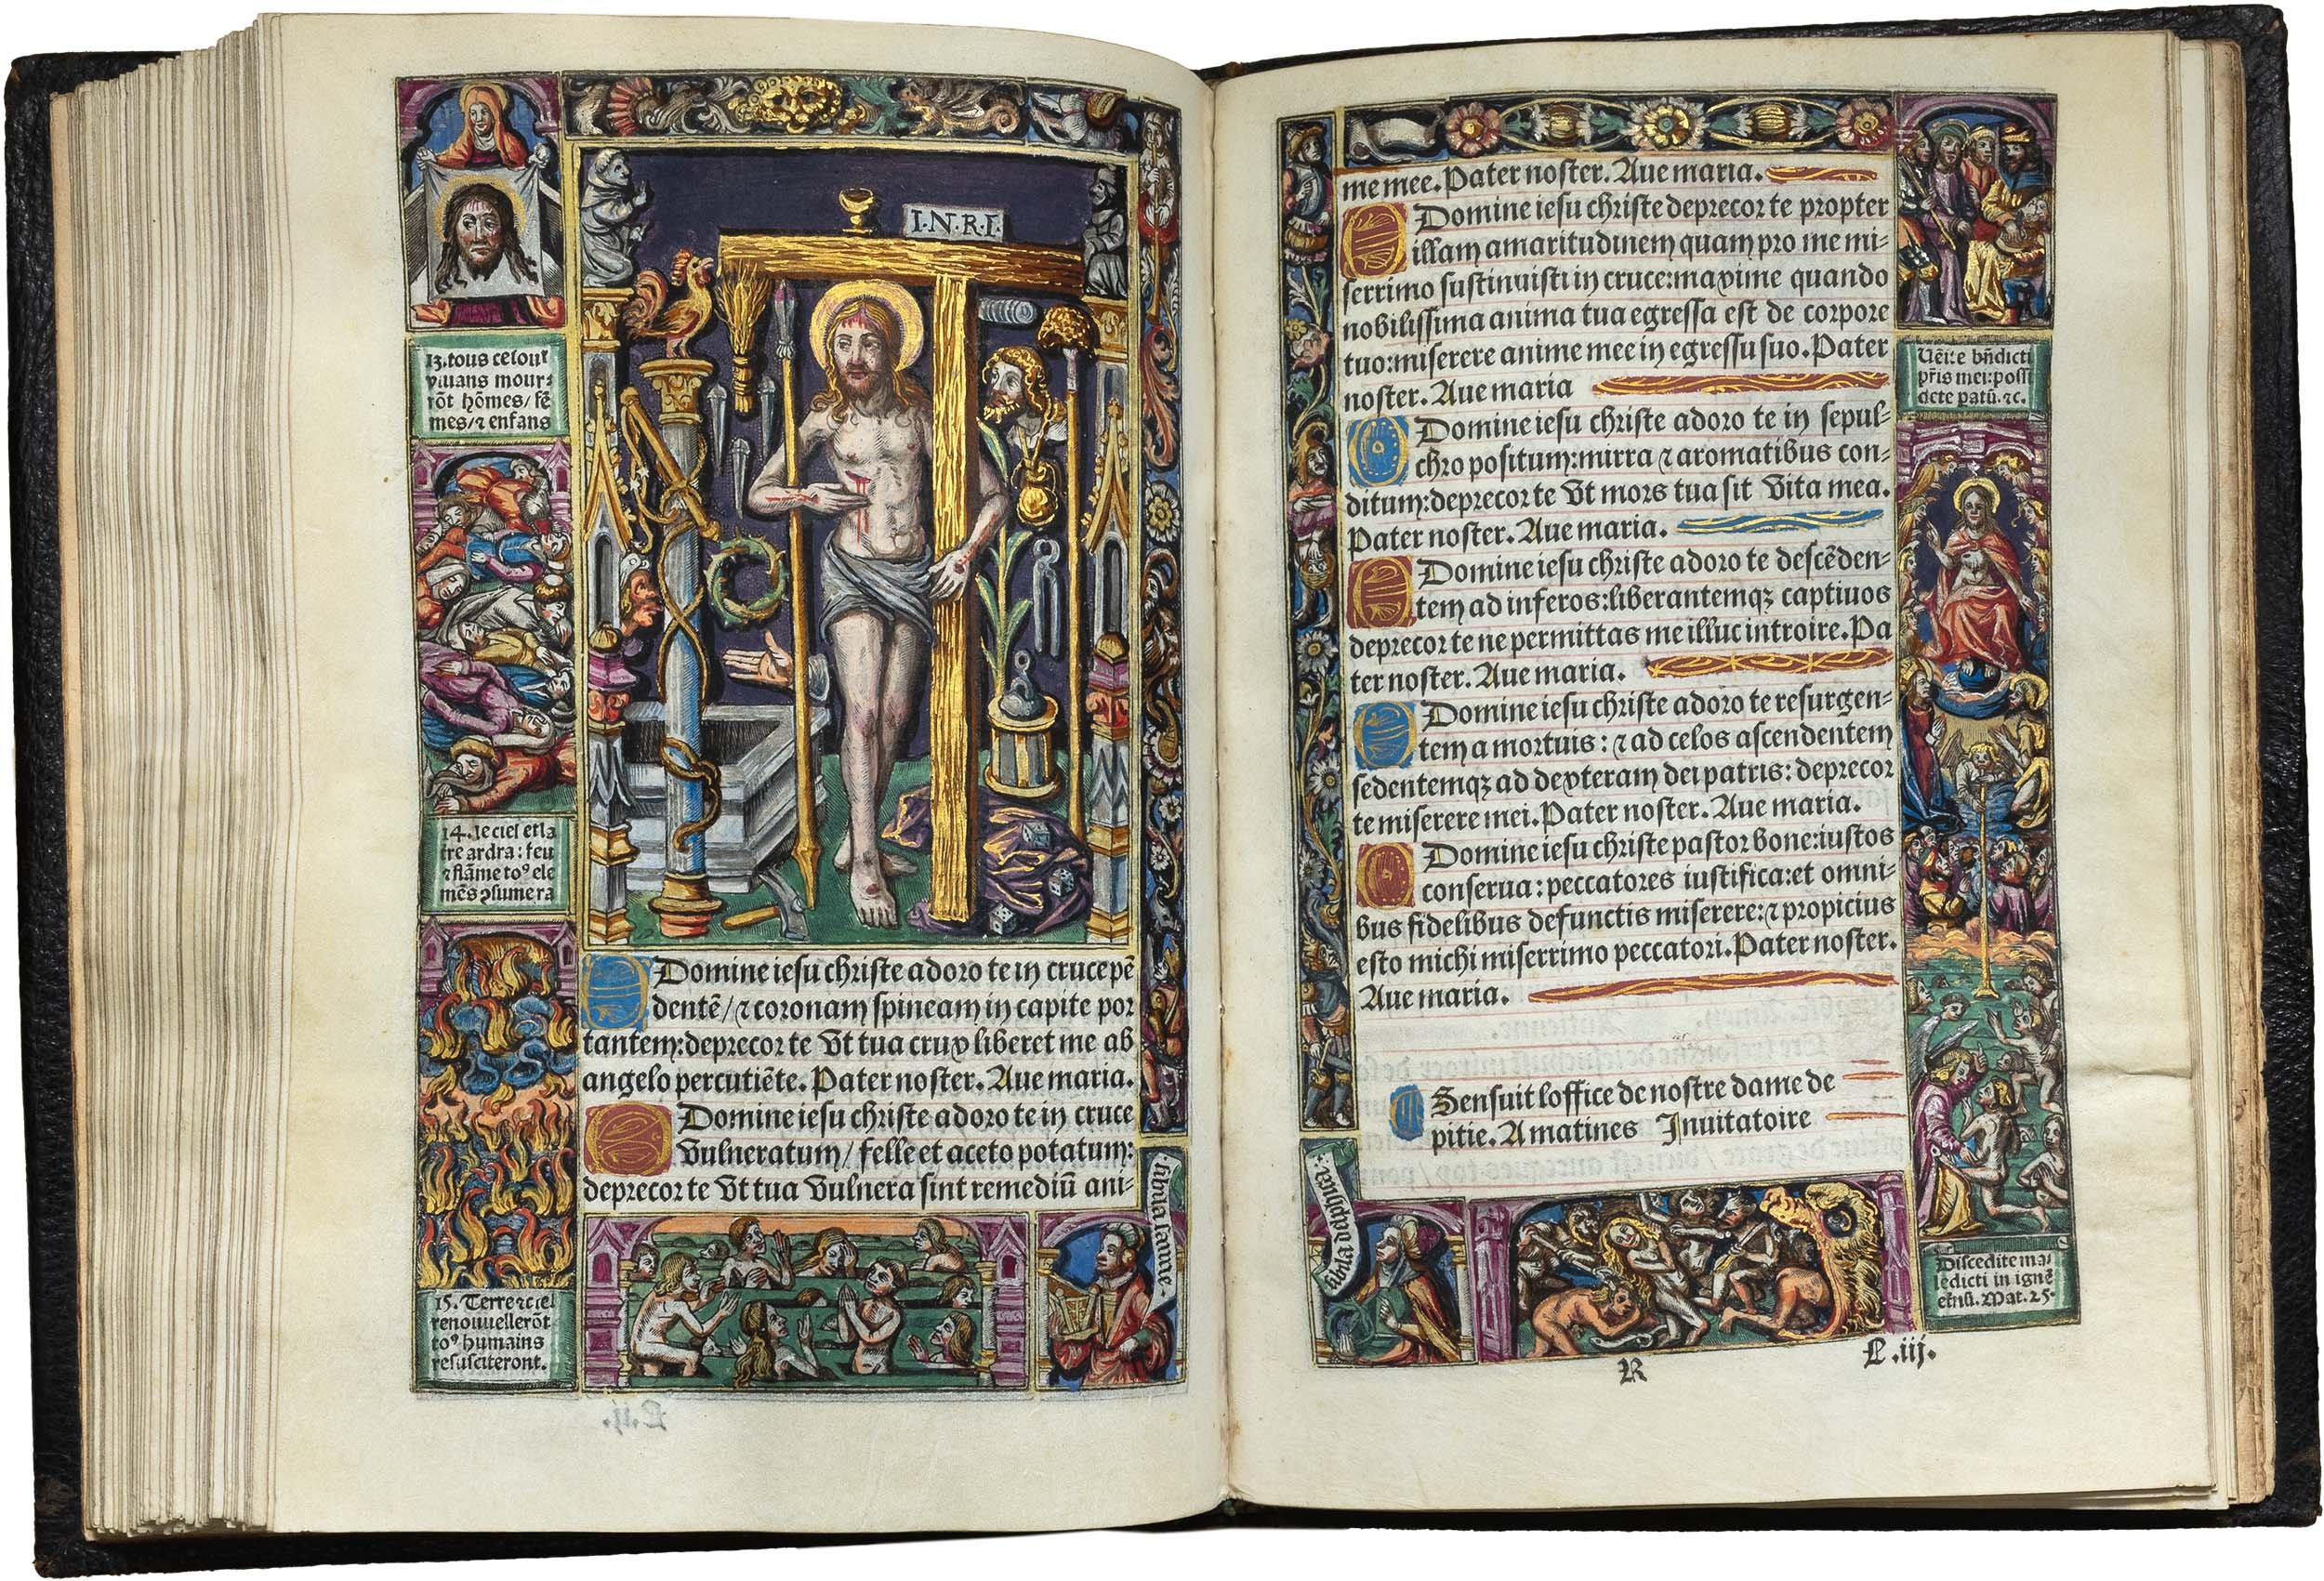 Printed-Book-of-Hours-10-january-1503-horae-bmv-kerver-remacle-illuminated-vellum-copy-schönborn-buchheim-85.jpg